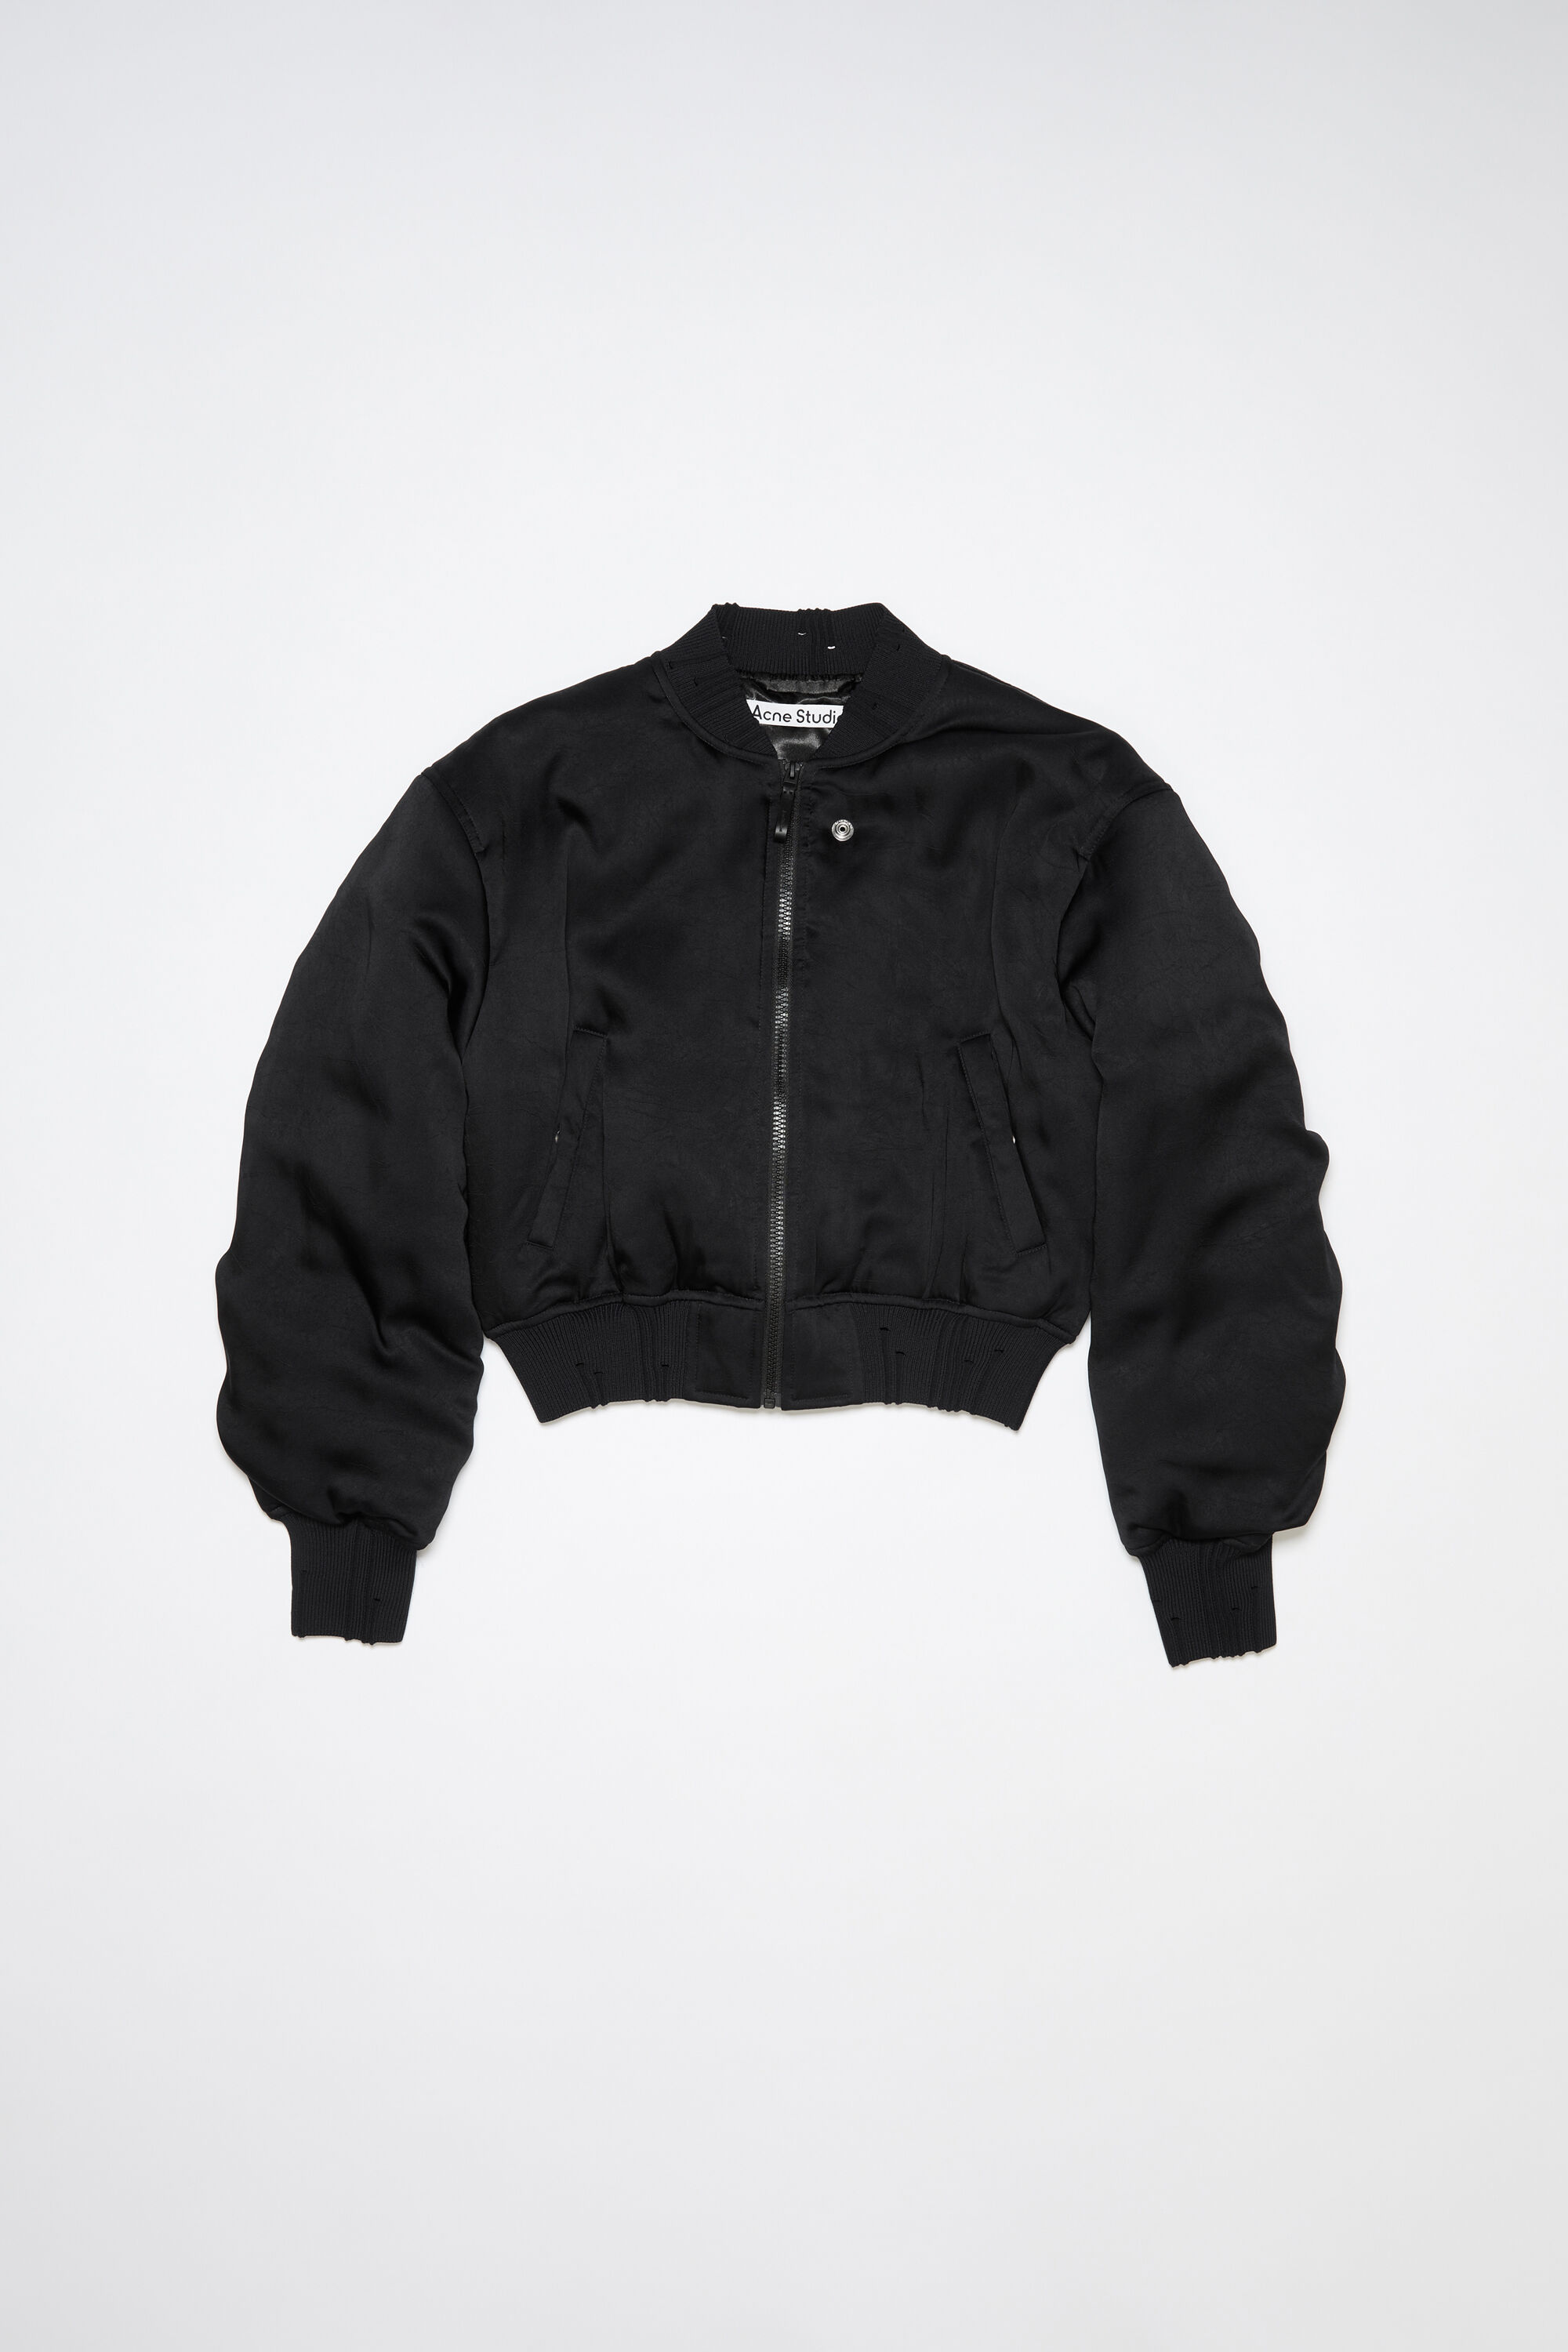 Acne Studios - Logo patch bomber jacket - Black